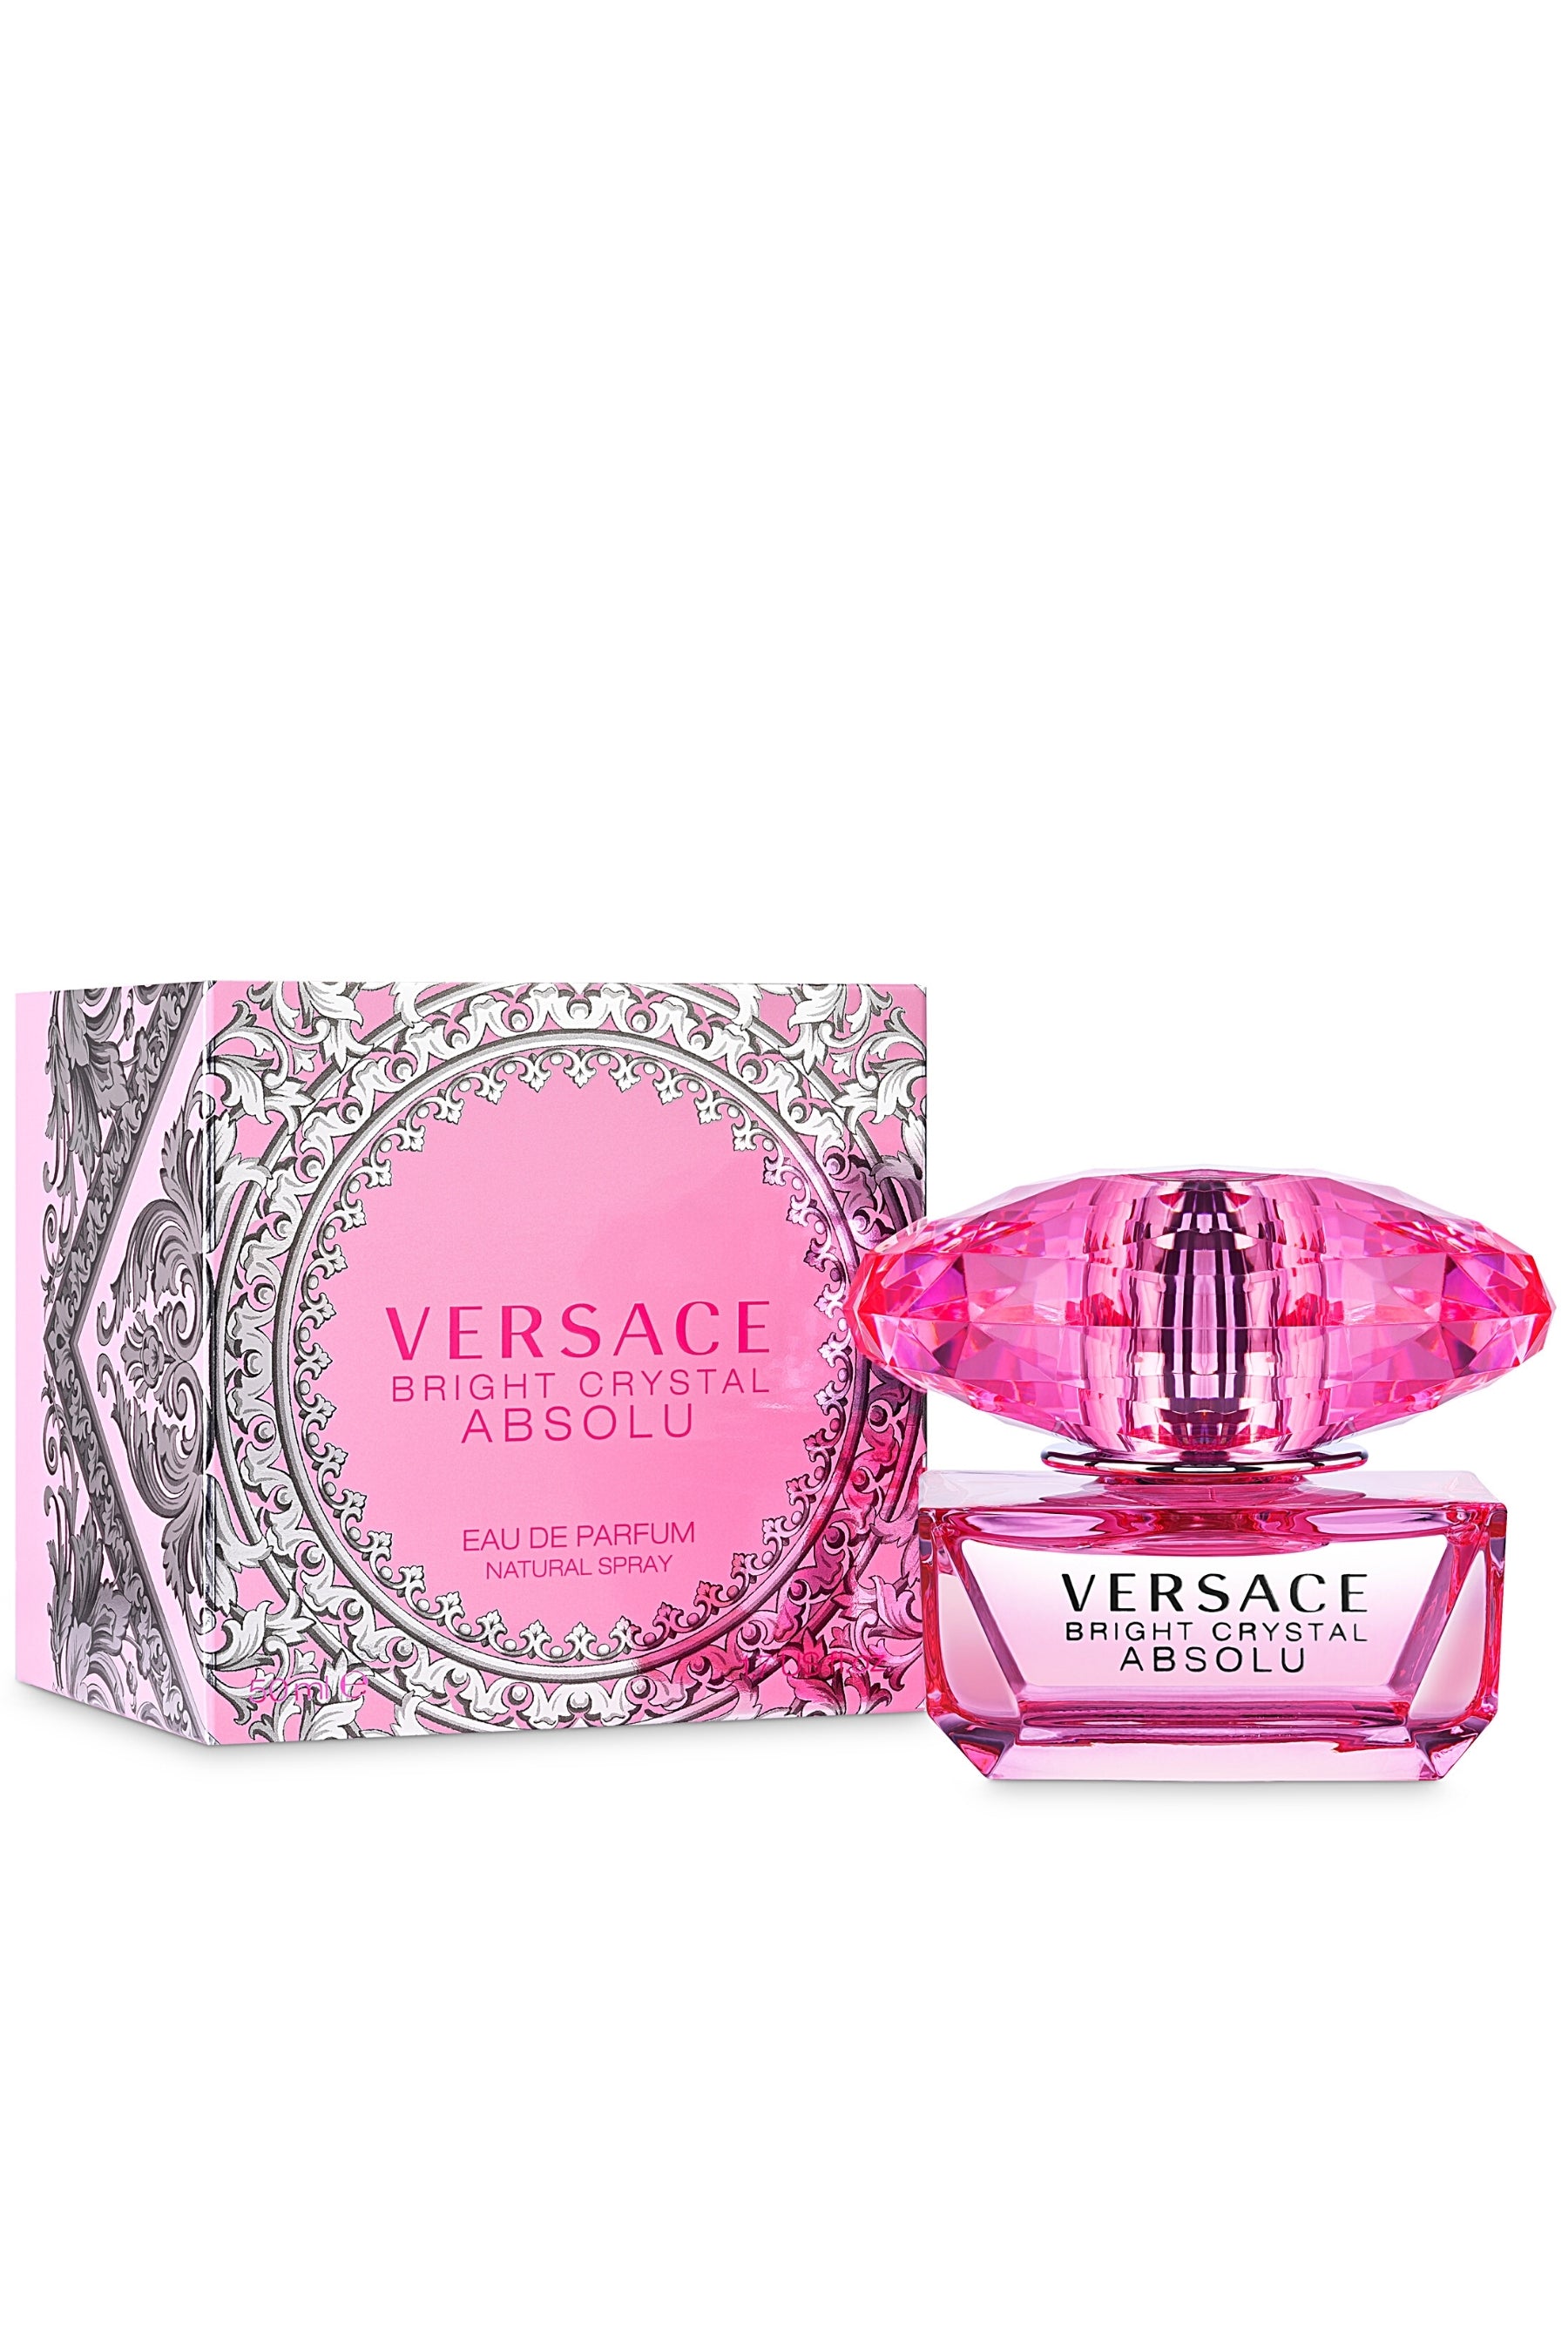 Versace Bright Crystal 3pc Set Women Perfume edt Spray 3.0 oz Lotion 5.0 oz  Mini | eBay